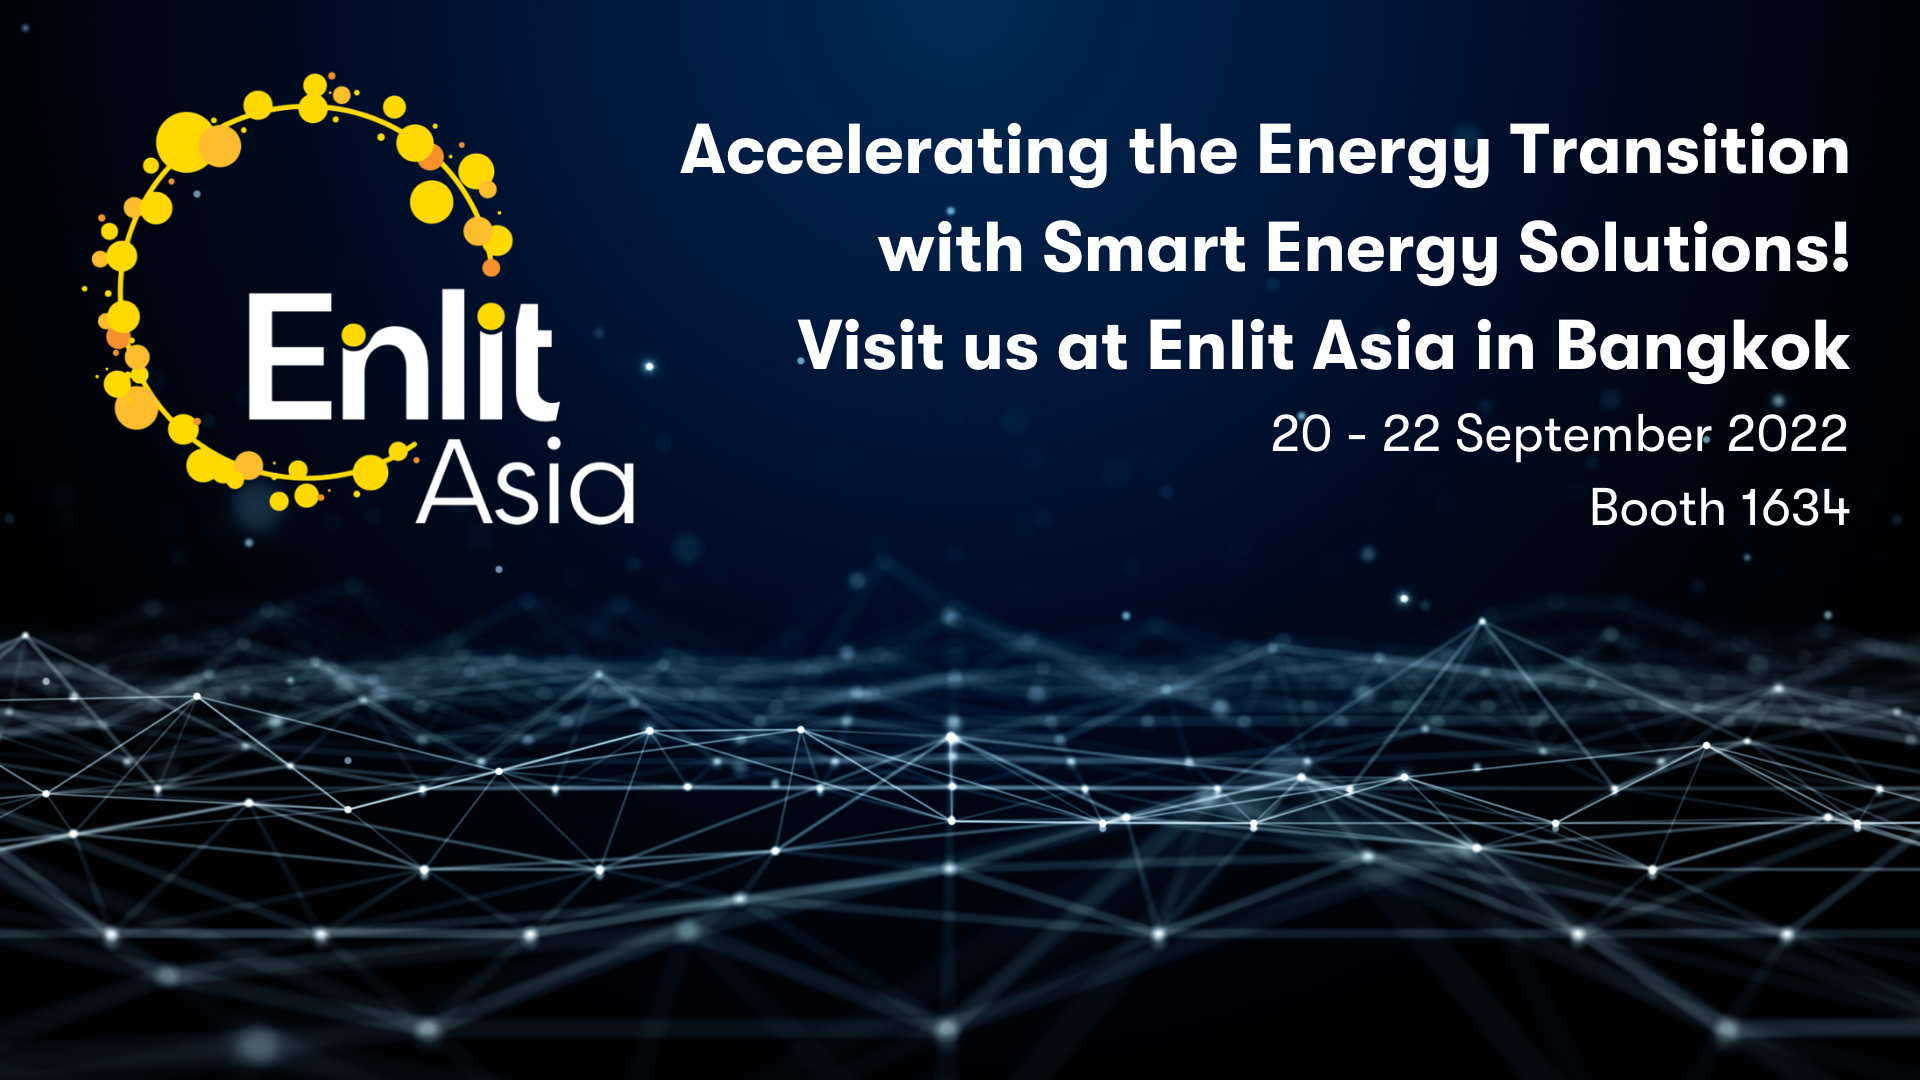 uploads/pics/https://www.ebsilon.com/uploads/pics/Accelerating_the_Energy_Transition_with_Smart_Digital_Solutions_Visit_us_at_Enlit_Asia_in_Bangkok__1__11.png